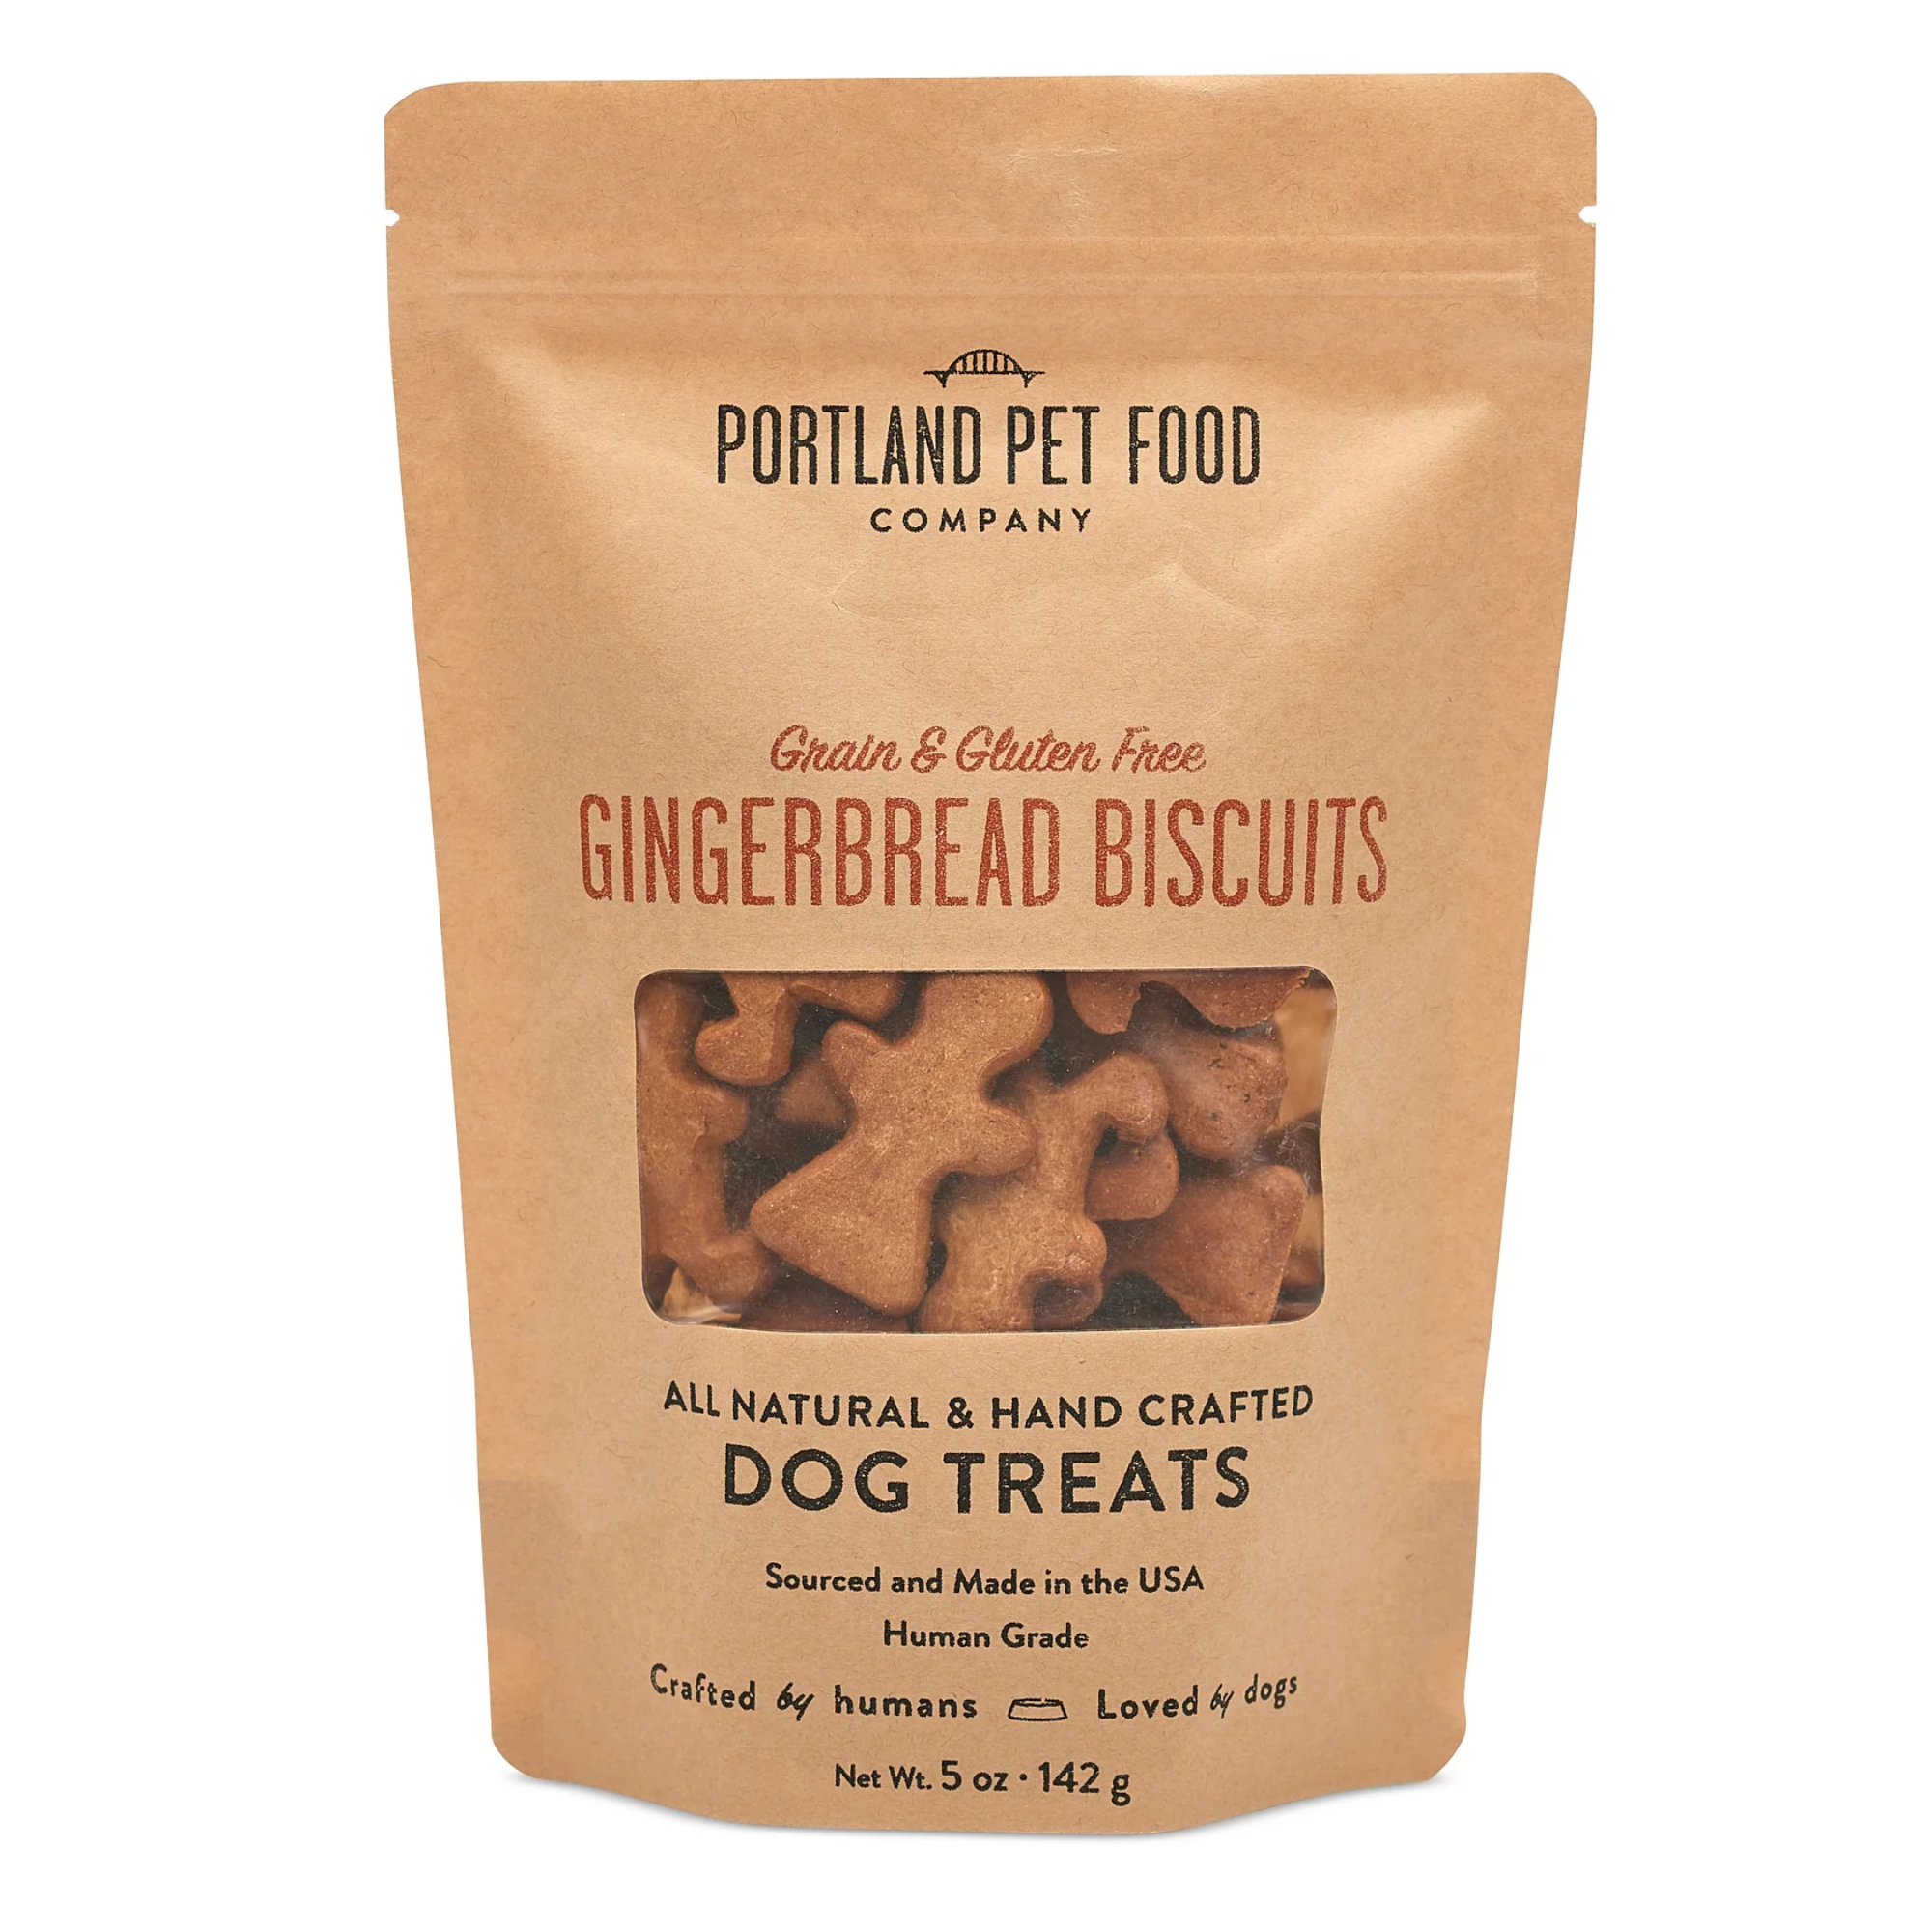 Portland Pet Food Co Portland Pet Food Co. Gingerbread Biscuits